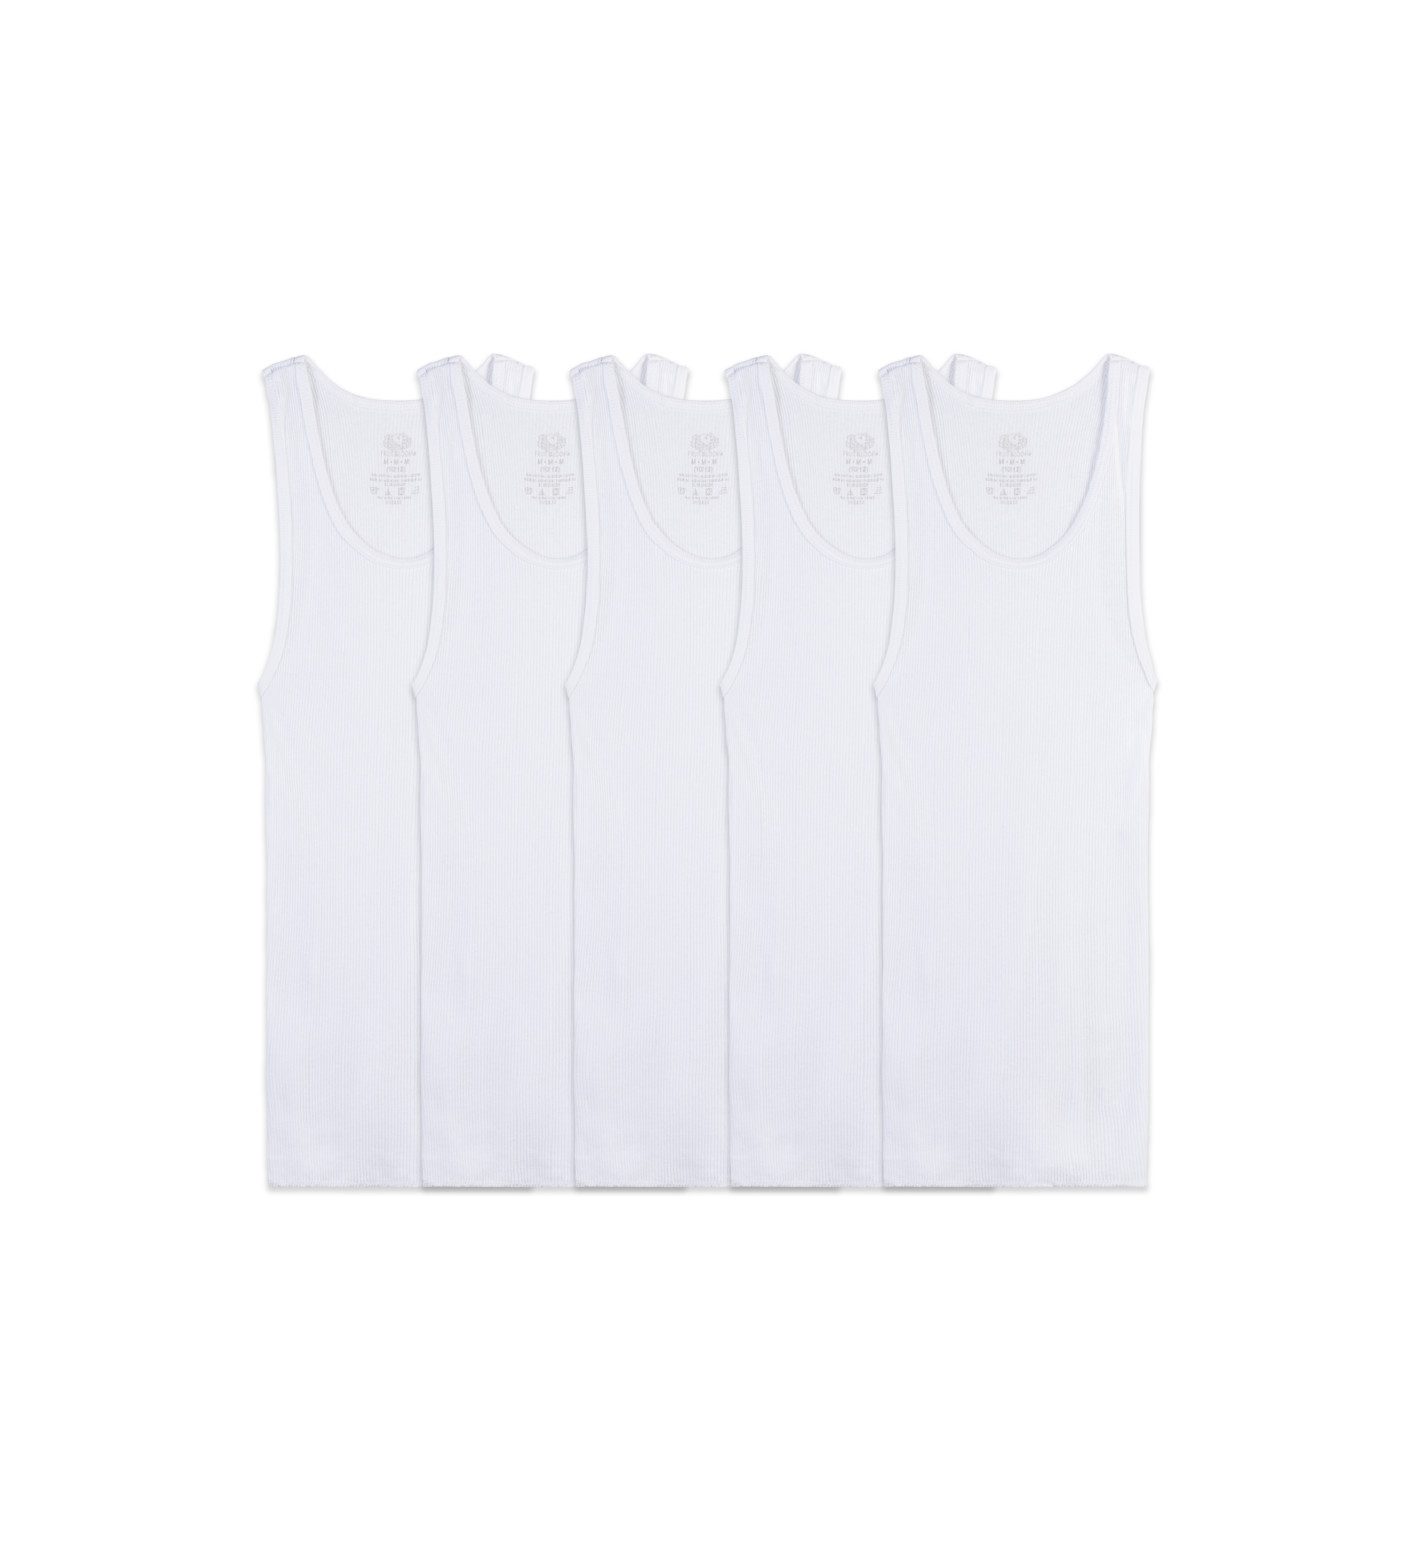 Boys' White Tank Top A-Shirts, 5 Pack